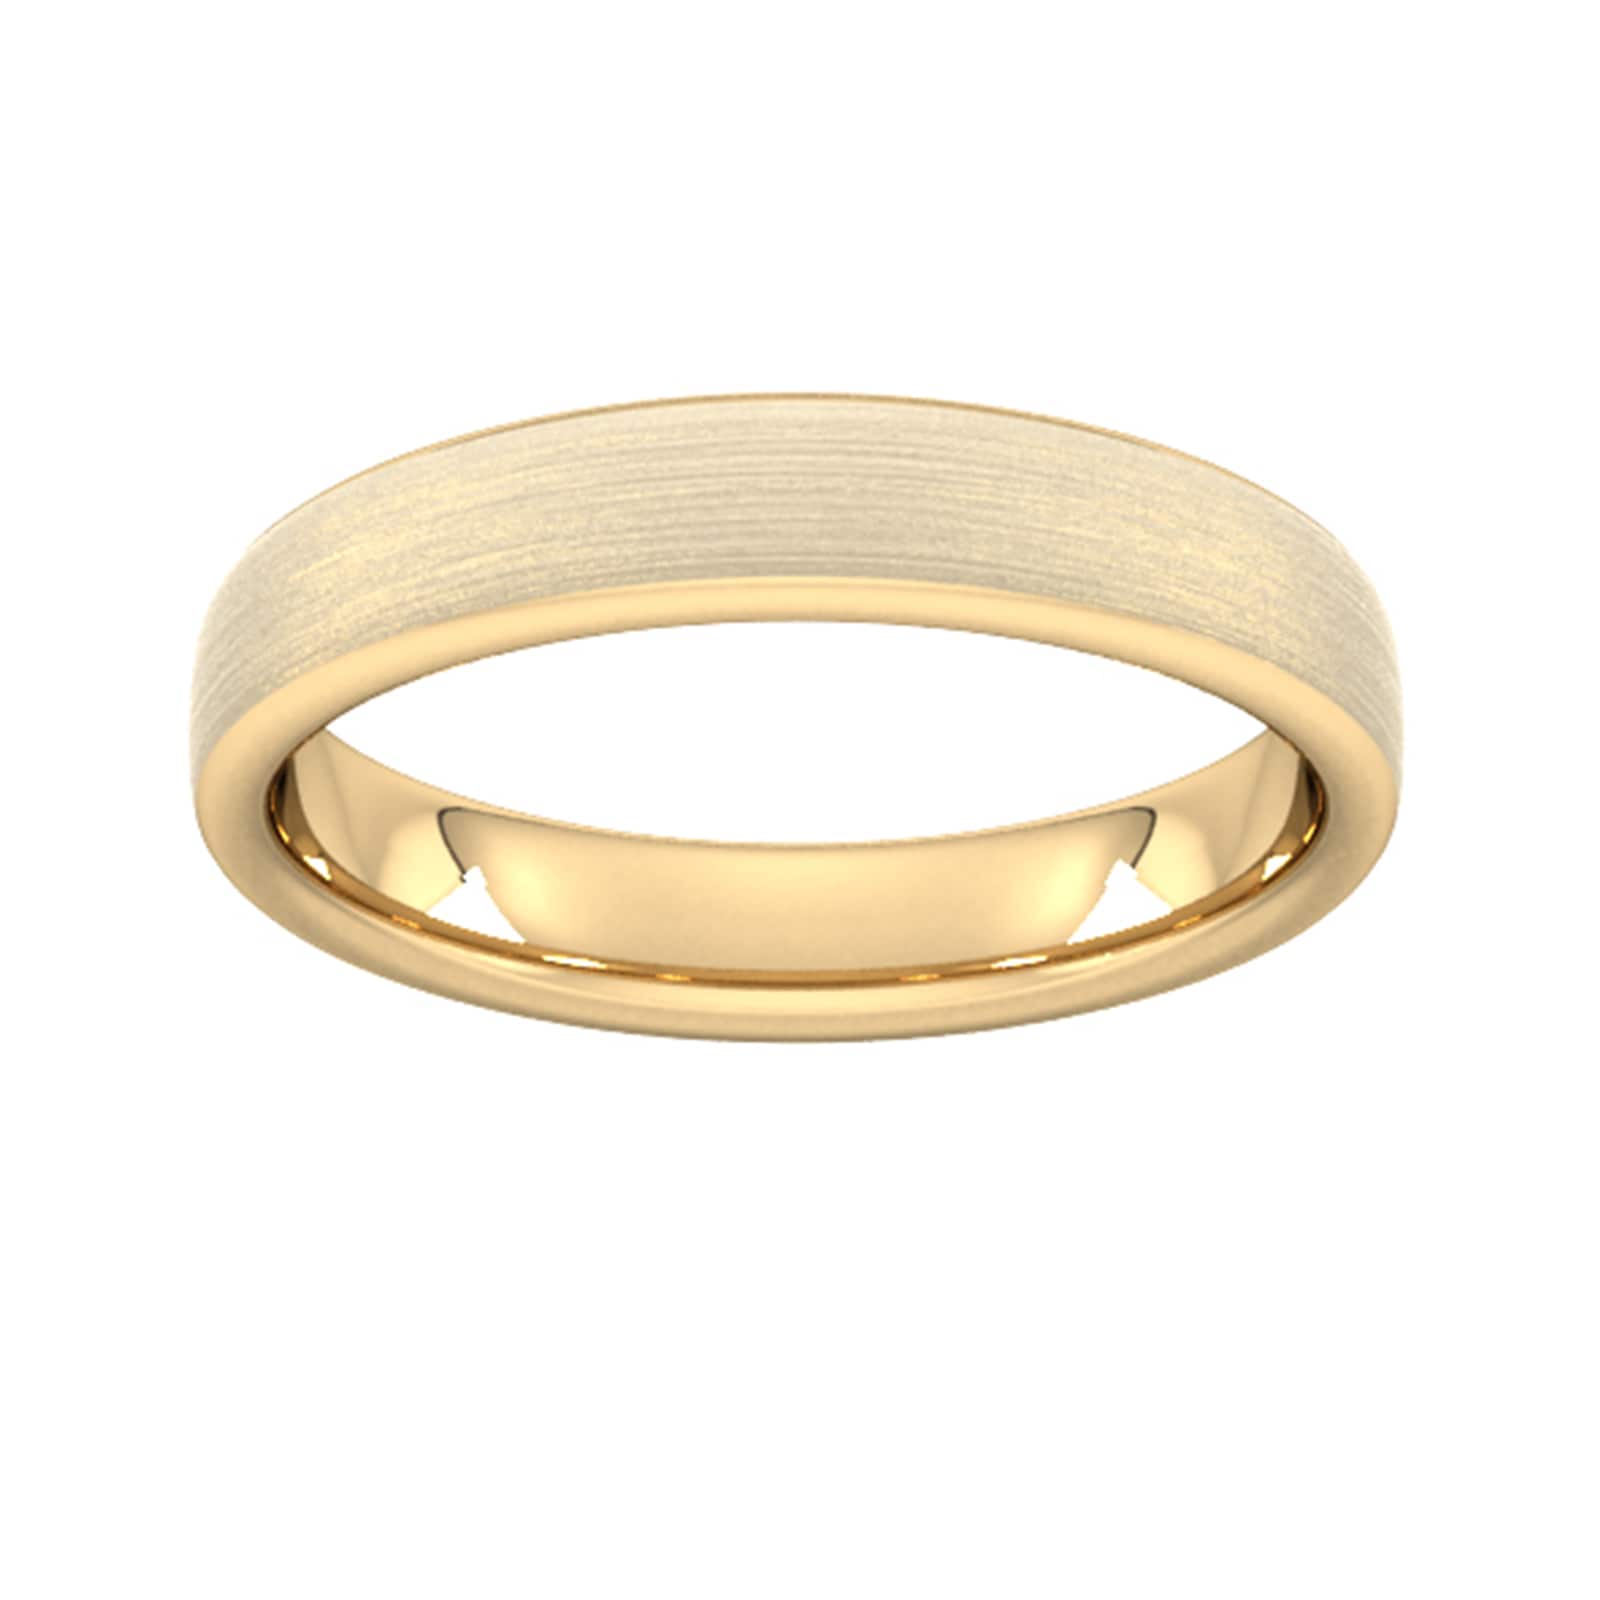 4mm Slight Court Heavy Matt Finished Wedding Ring In 18 Carat Yellow Gold - Ring Size R